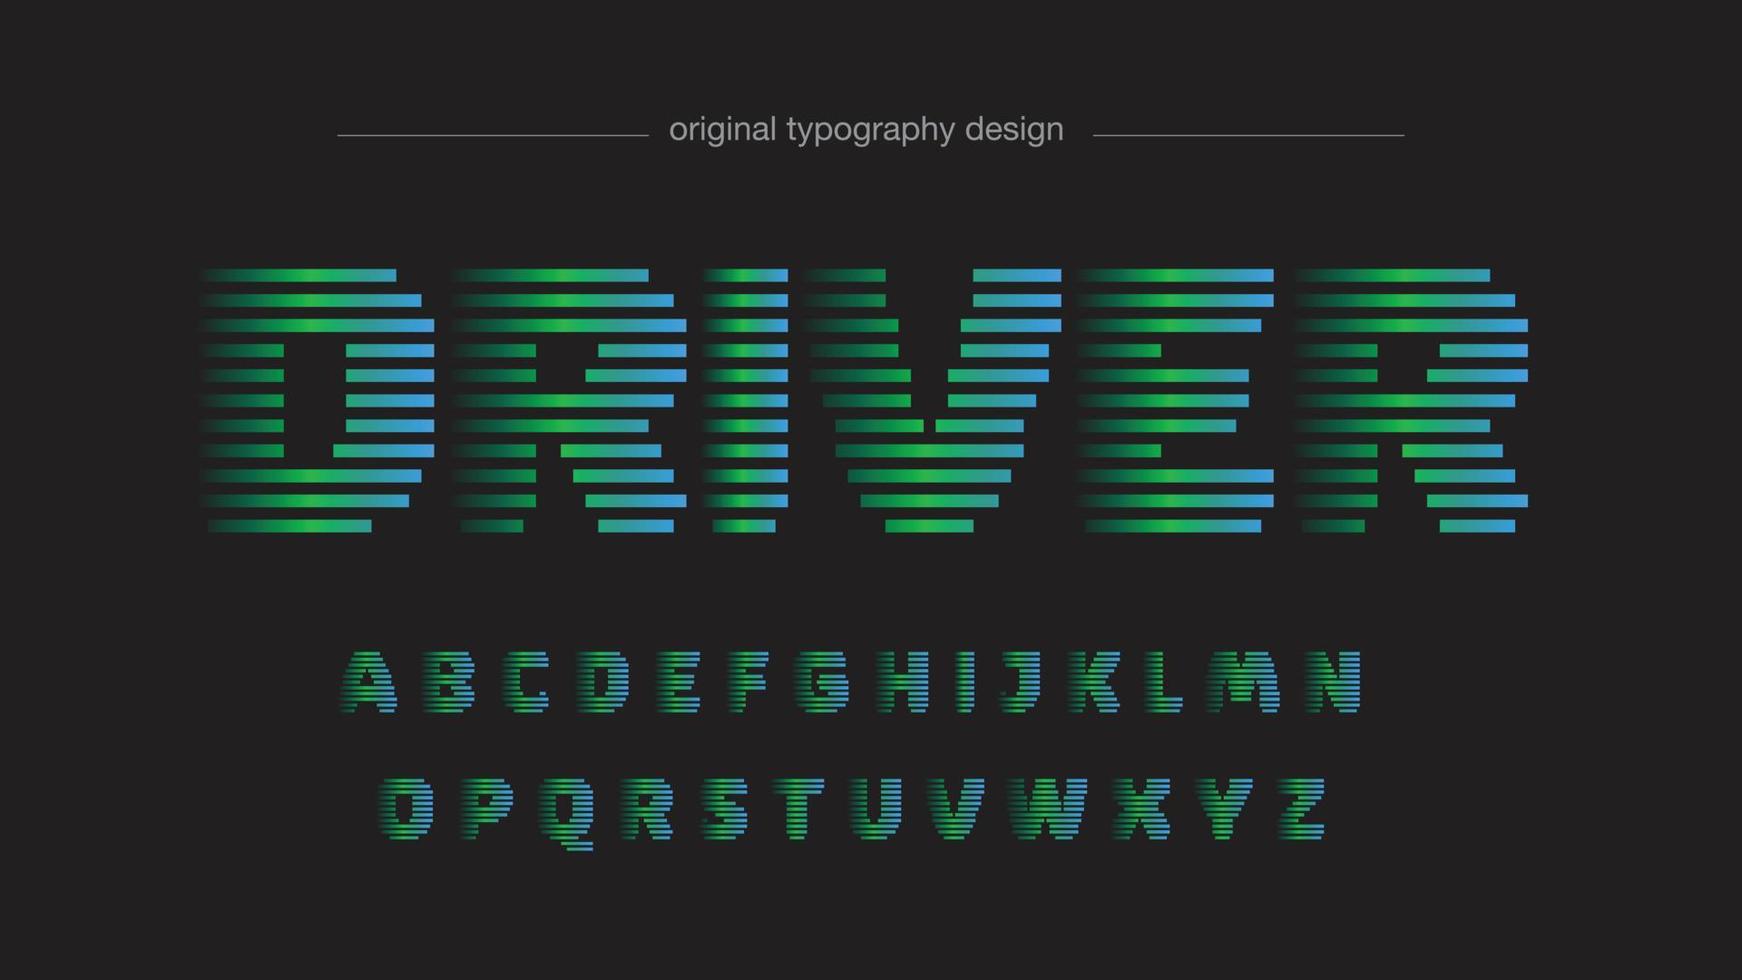 lignes vertes typographie sportive futuriste vecteur